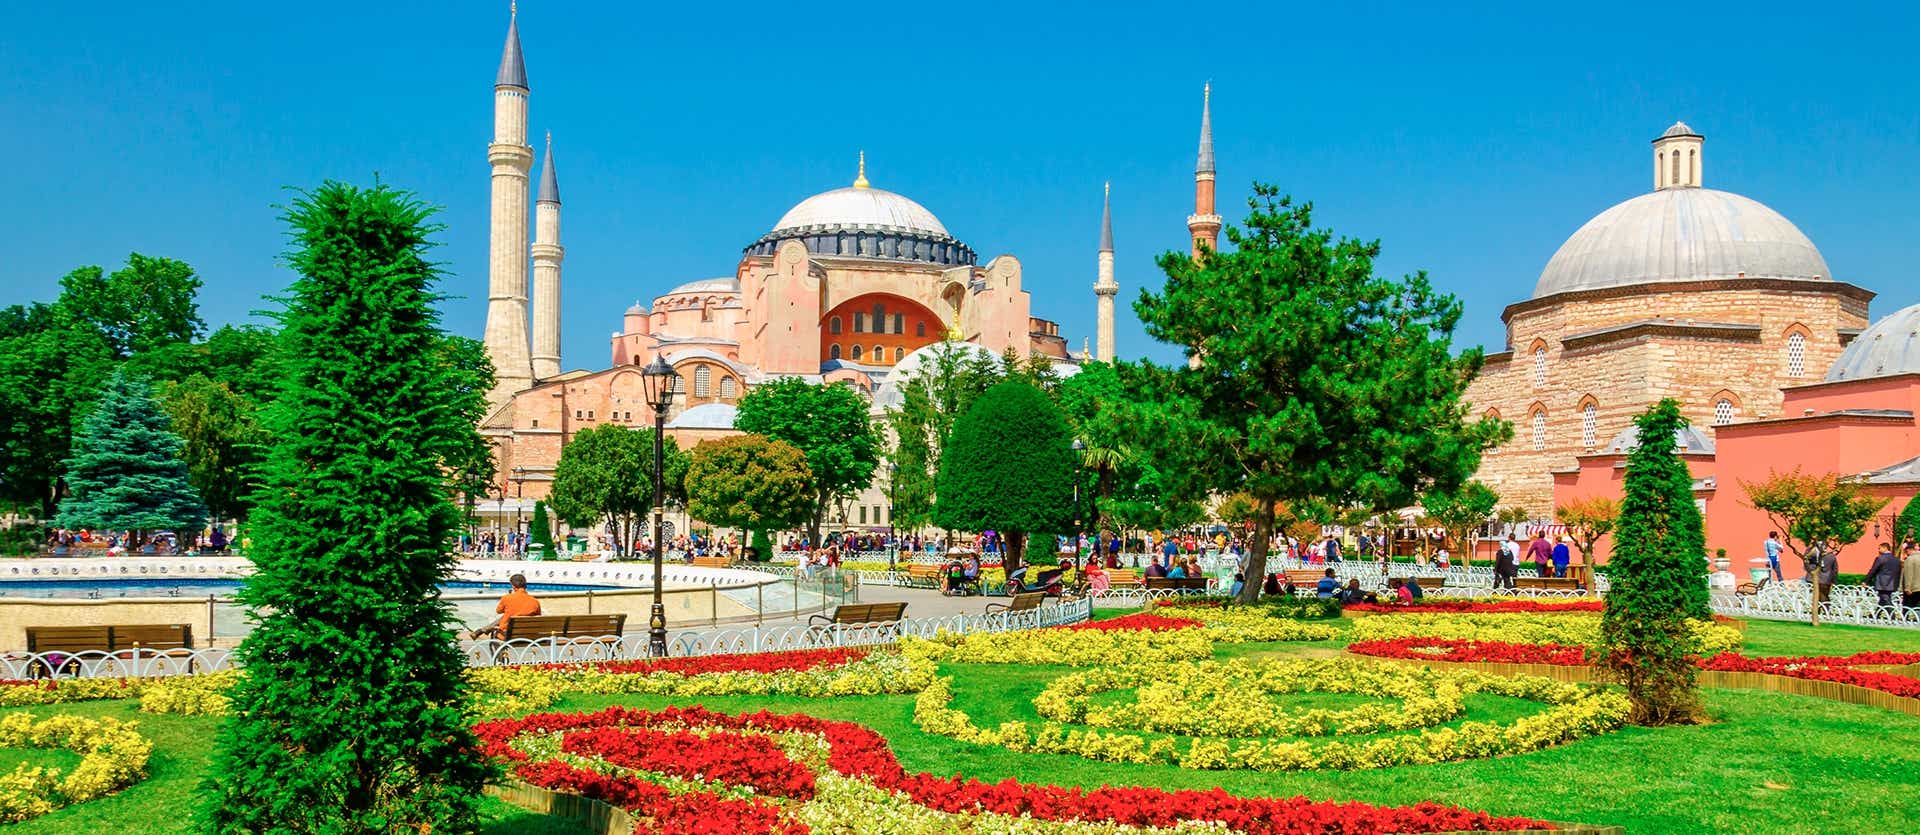 Hagia Sophia <span class="iconos separador"></span> Estambul <span class="iconos separador"></span> Turquía